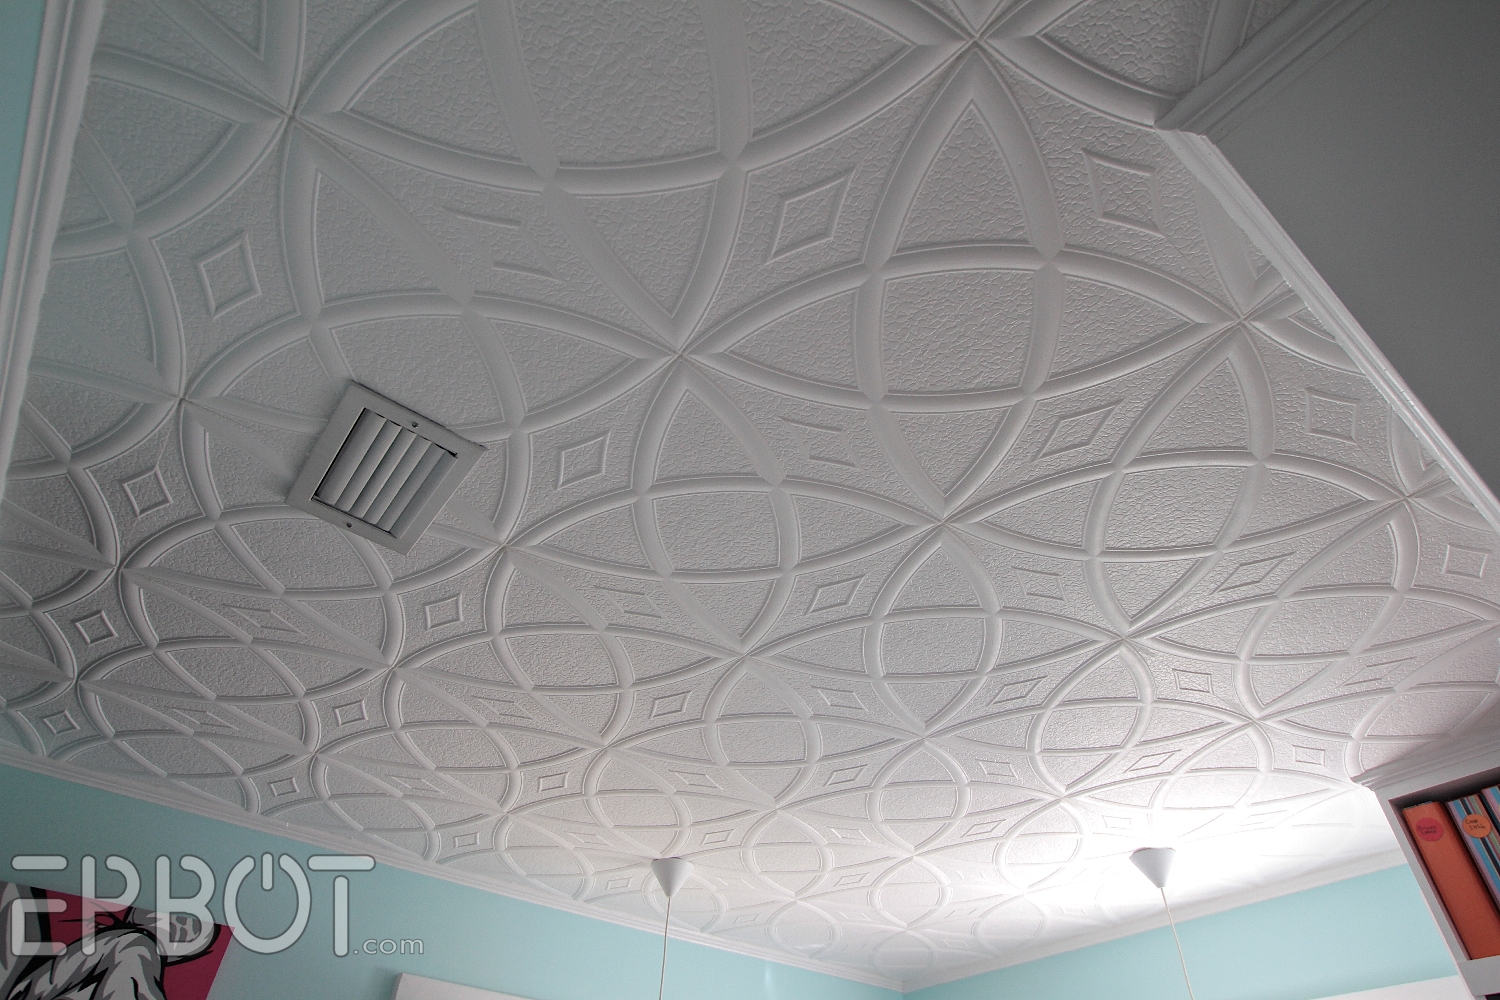 Styrofoam Ceiling Tiles Insulationepbot diy faux tin tile ceiling